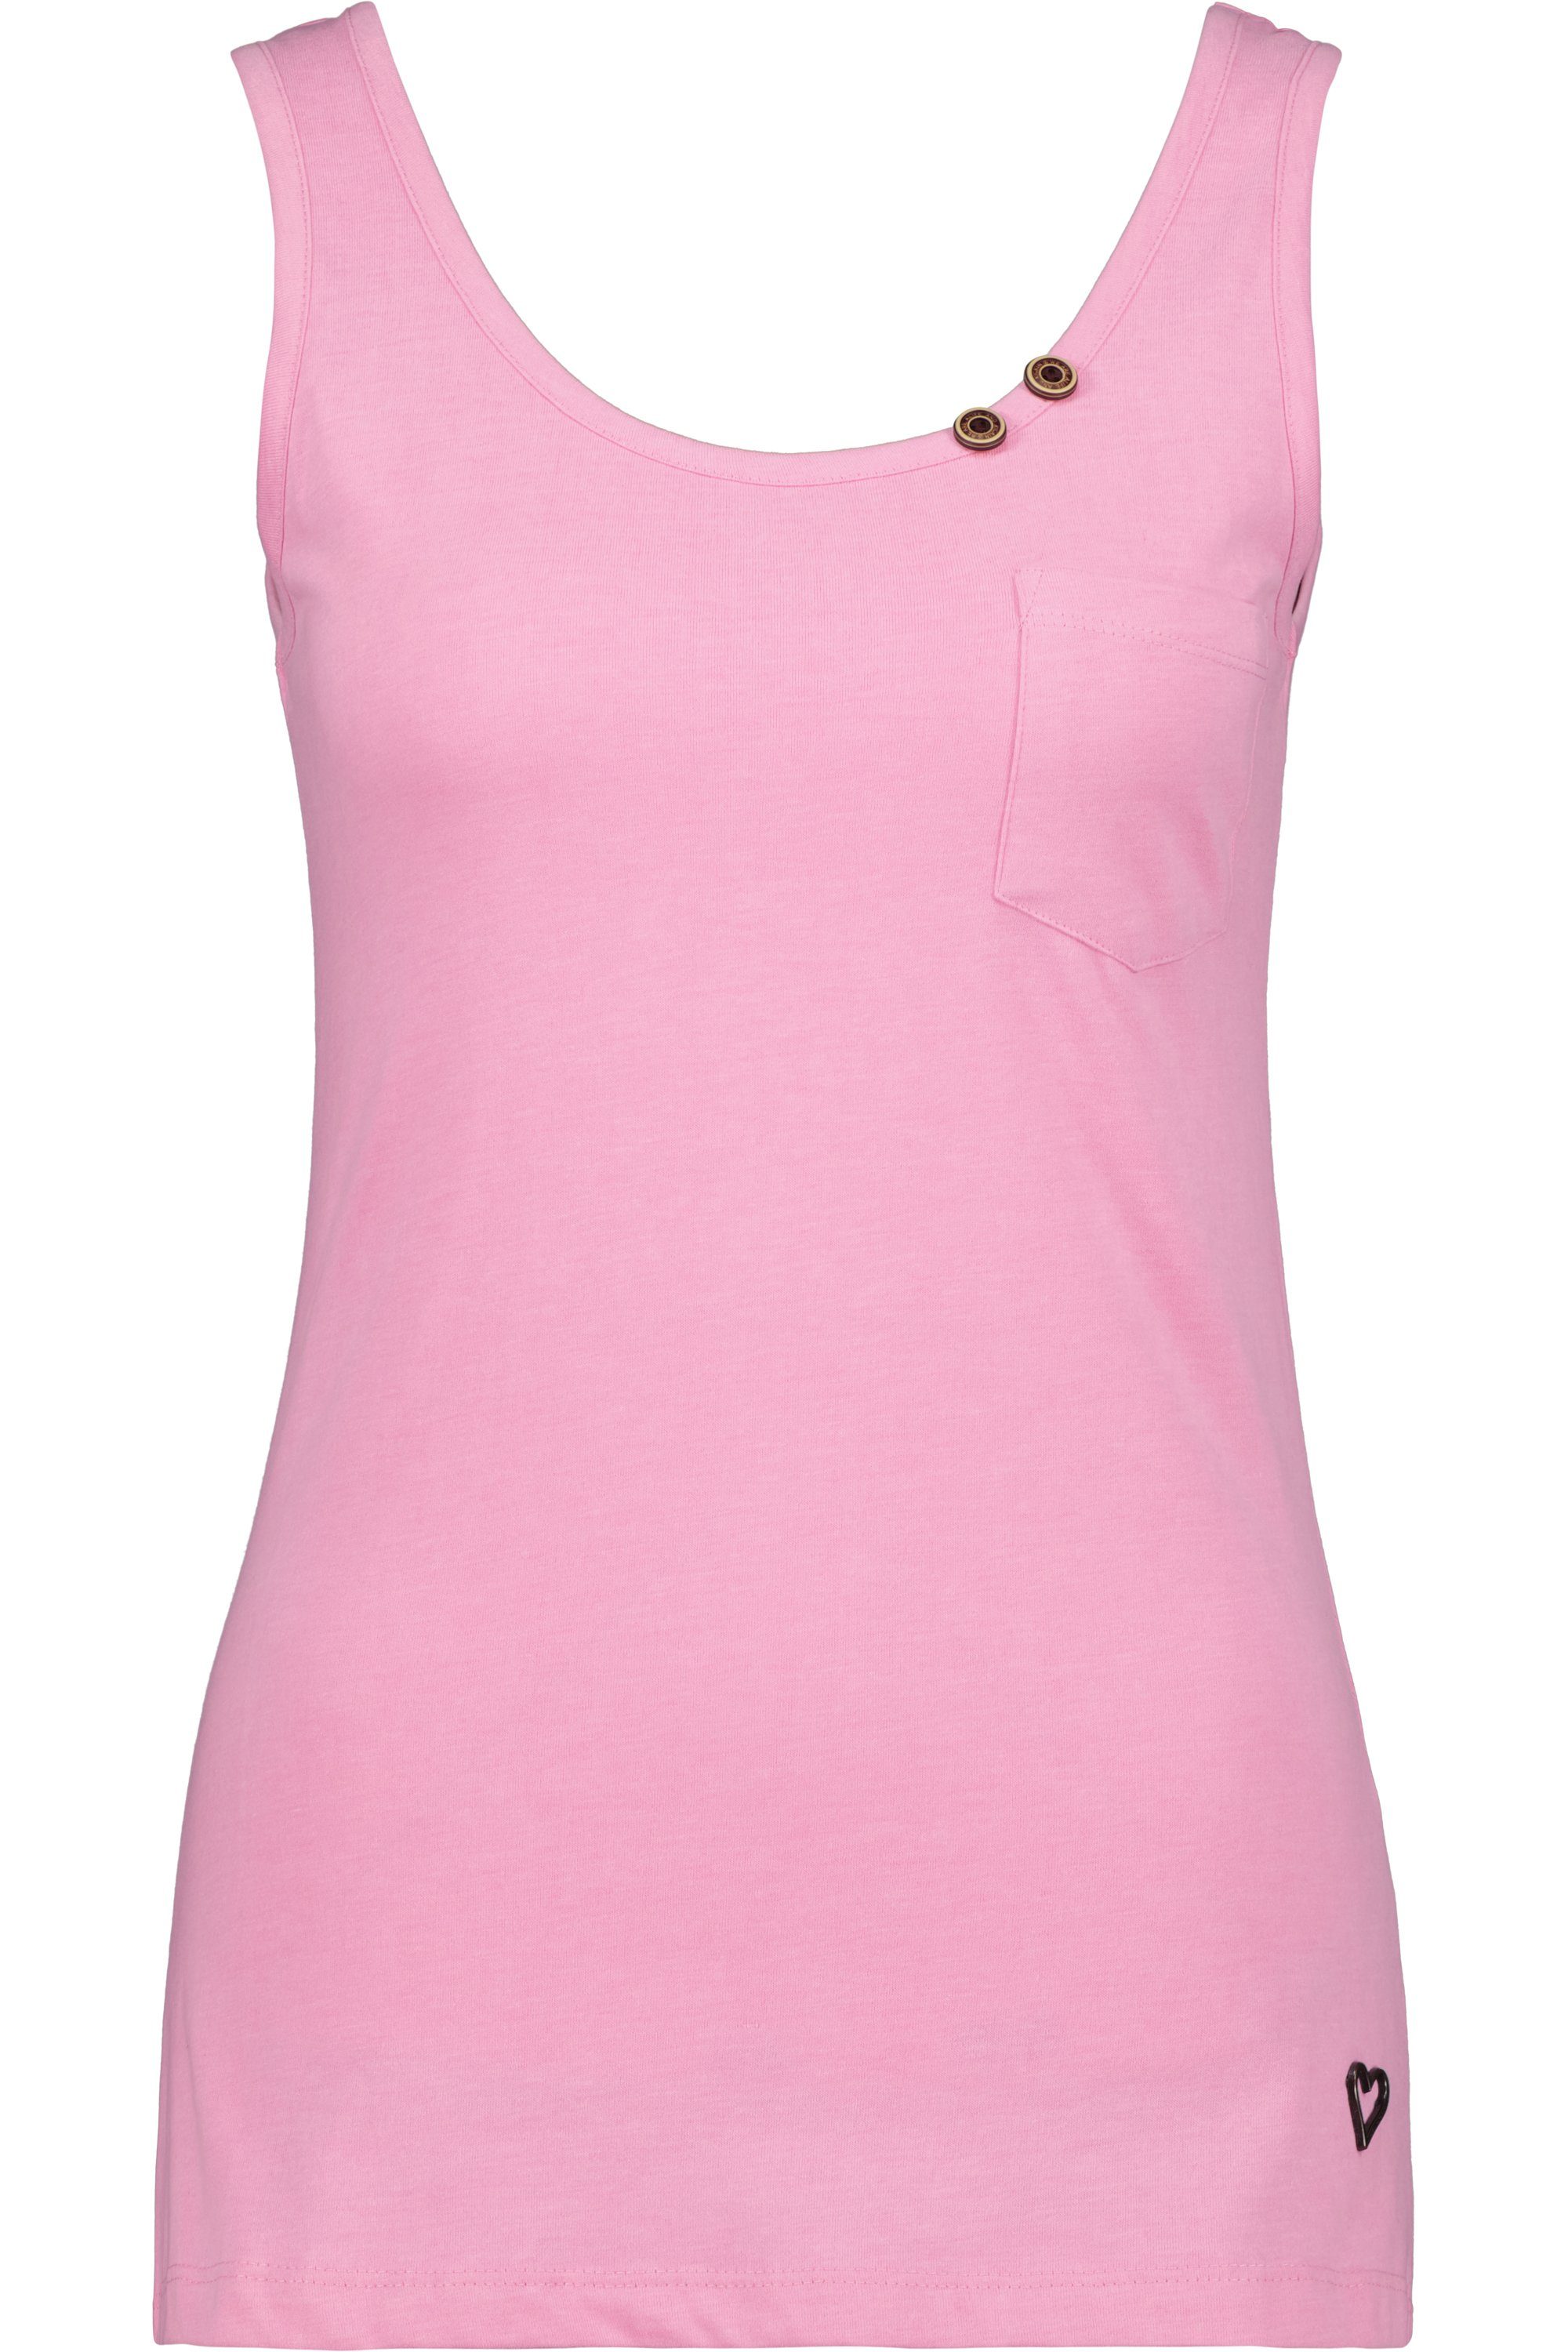 Alife Damen A Top JennyAK & bubblegum melange T-Shirt Kickin Shirt Tanktop,